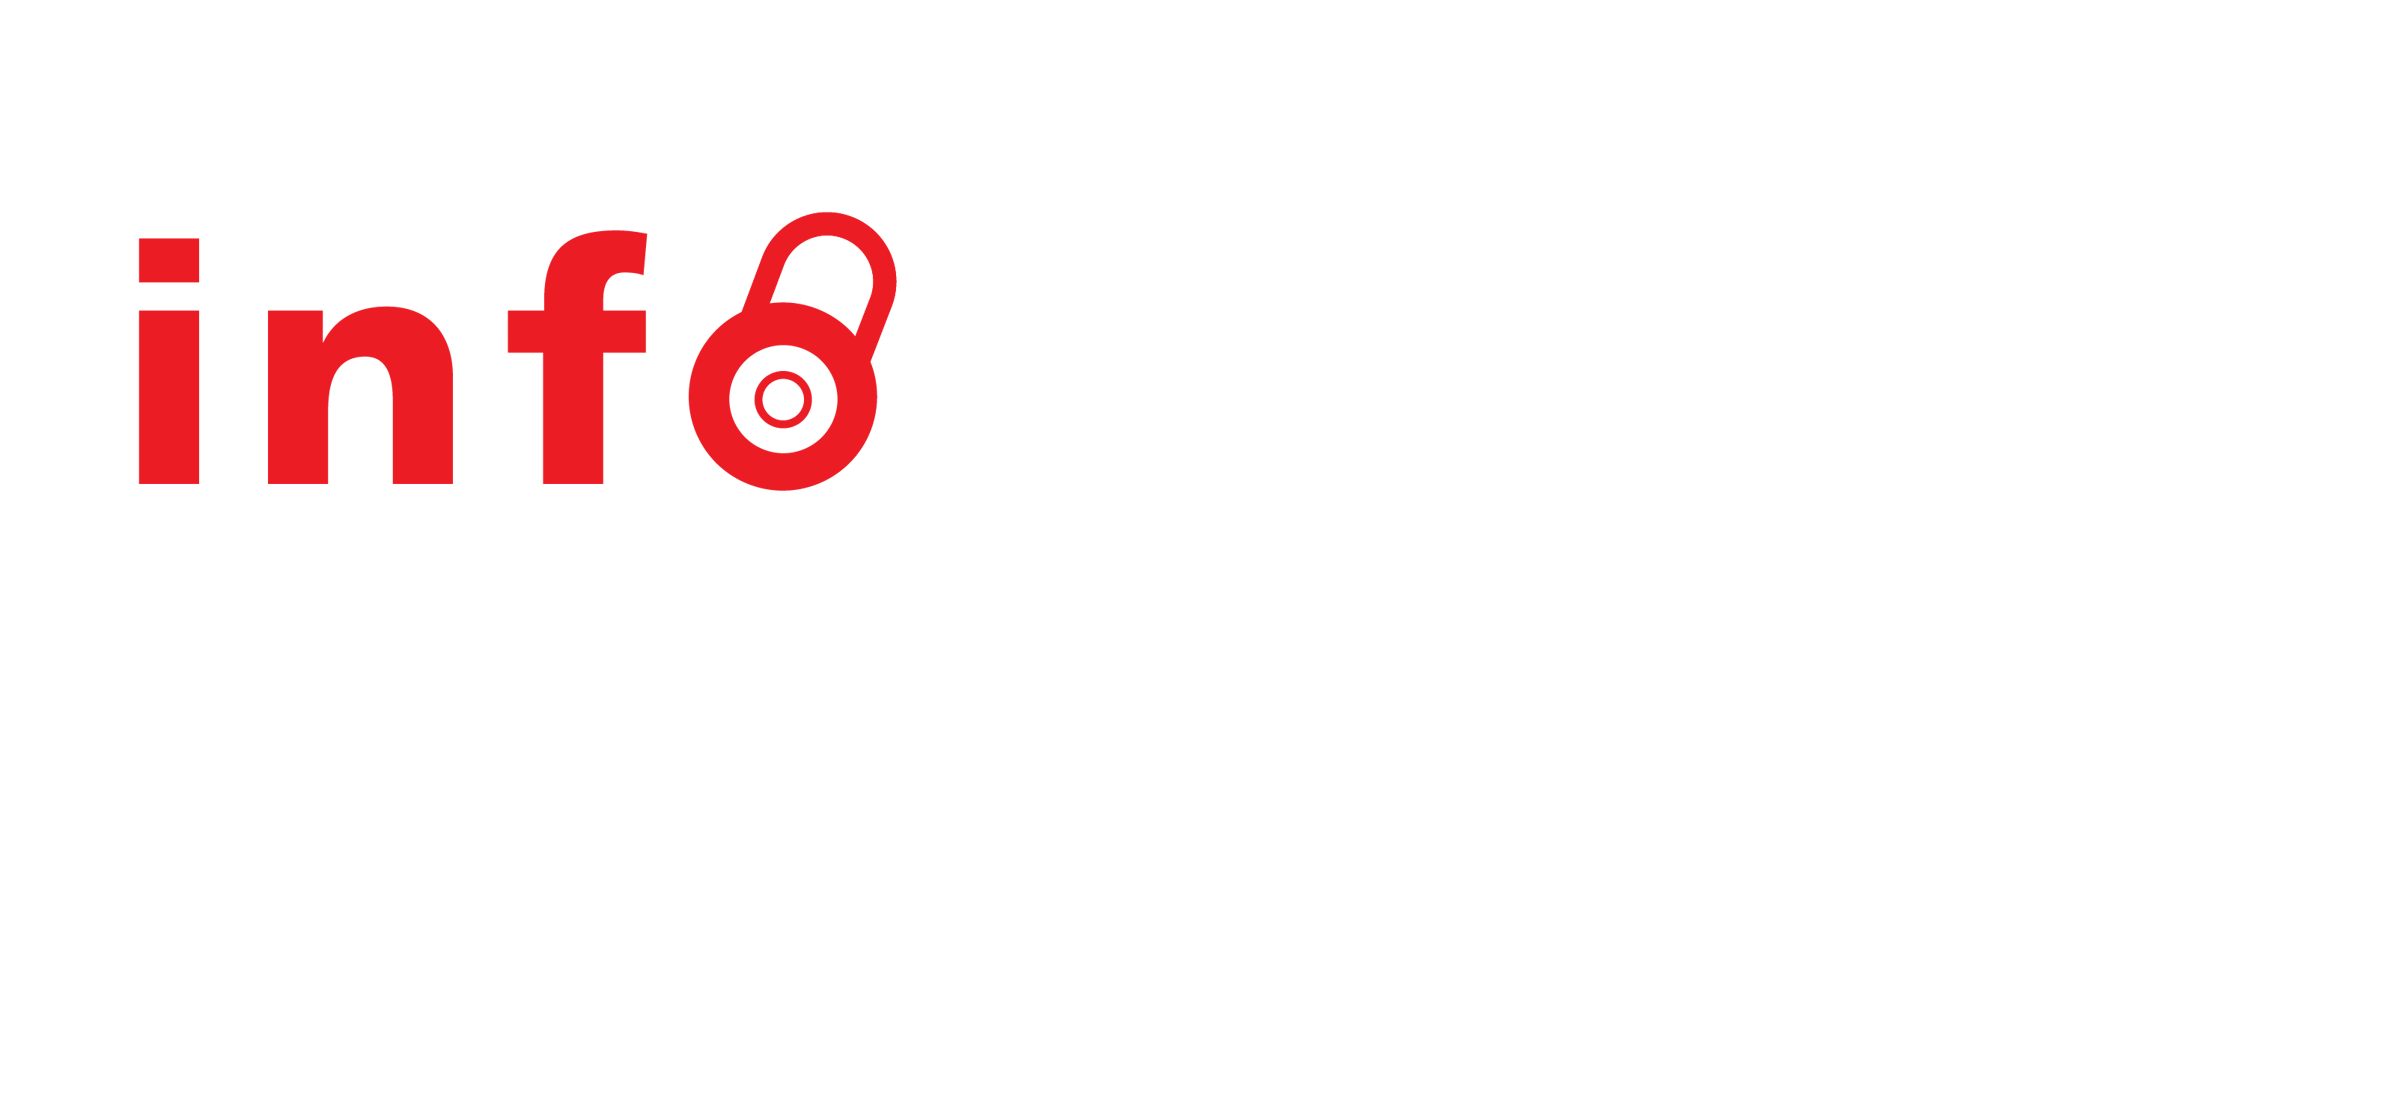 INFOSECURITY EUROPE logo_21-23 June_center_red white